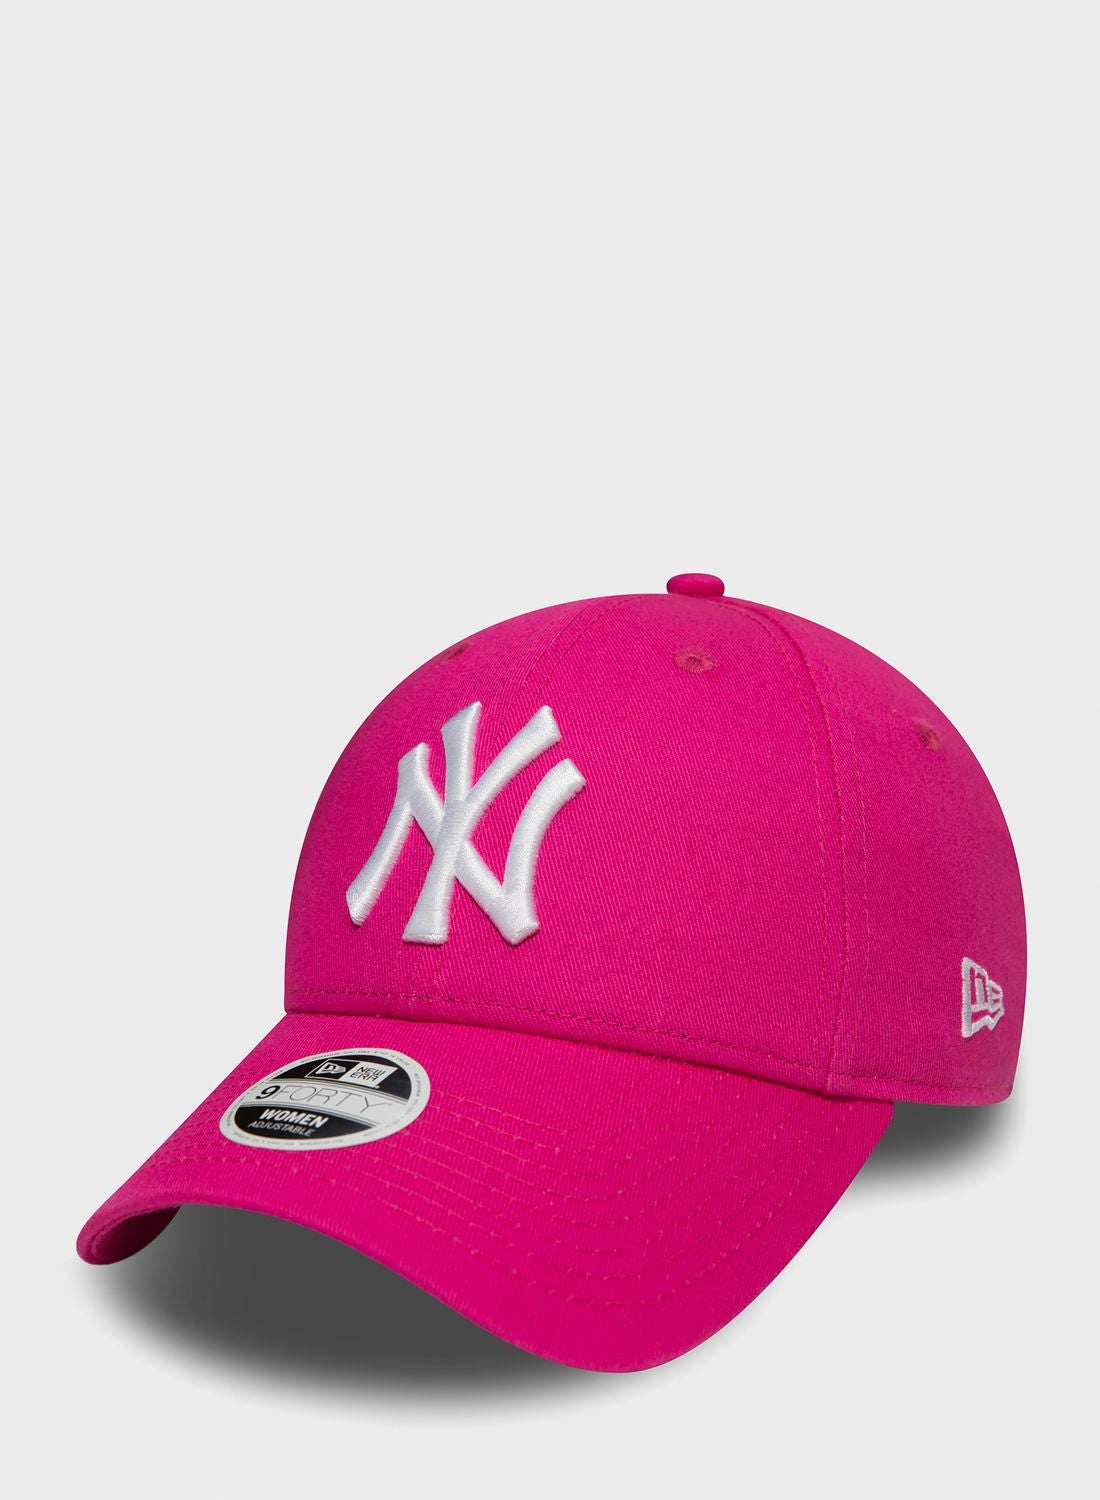 New Era Pink 9forty Ny Yankees Baseball Cap One Size